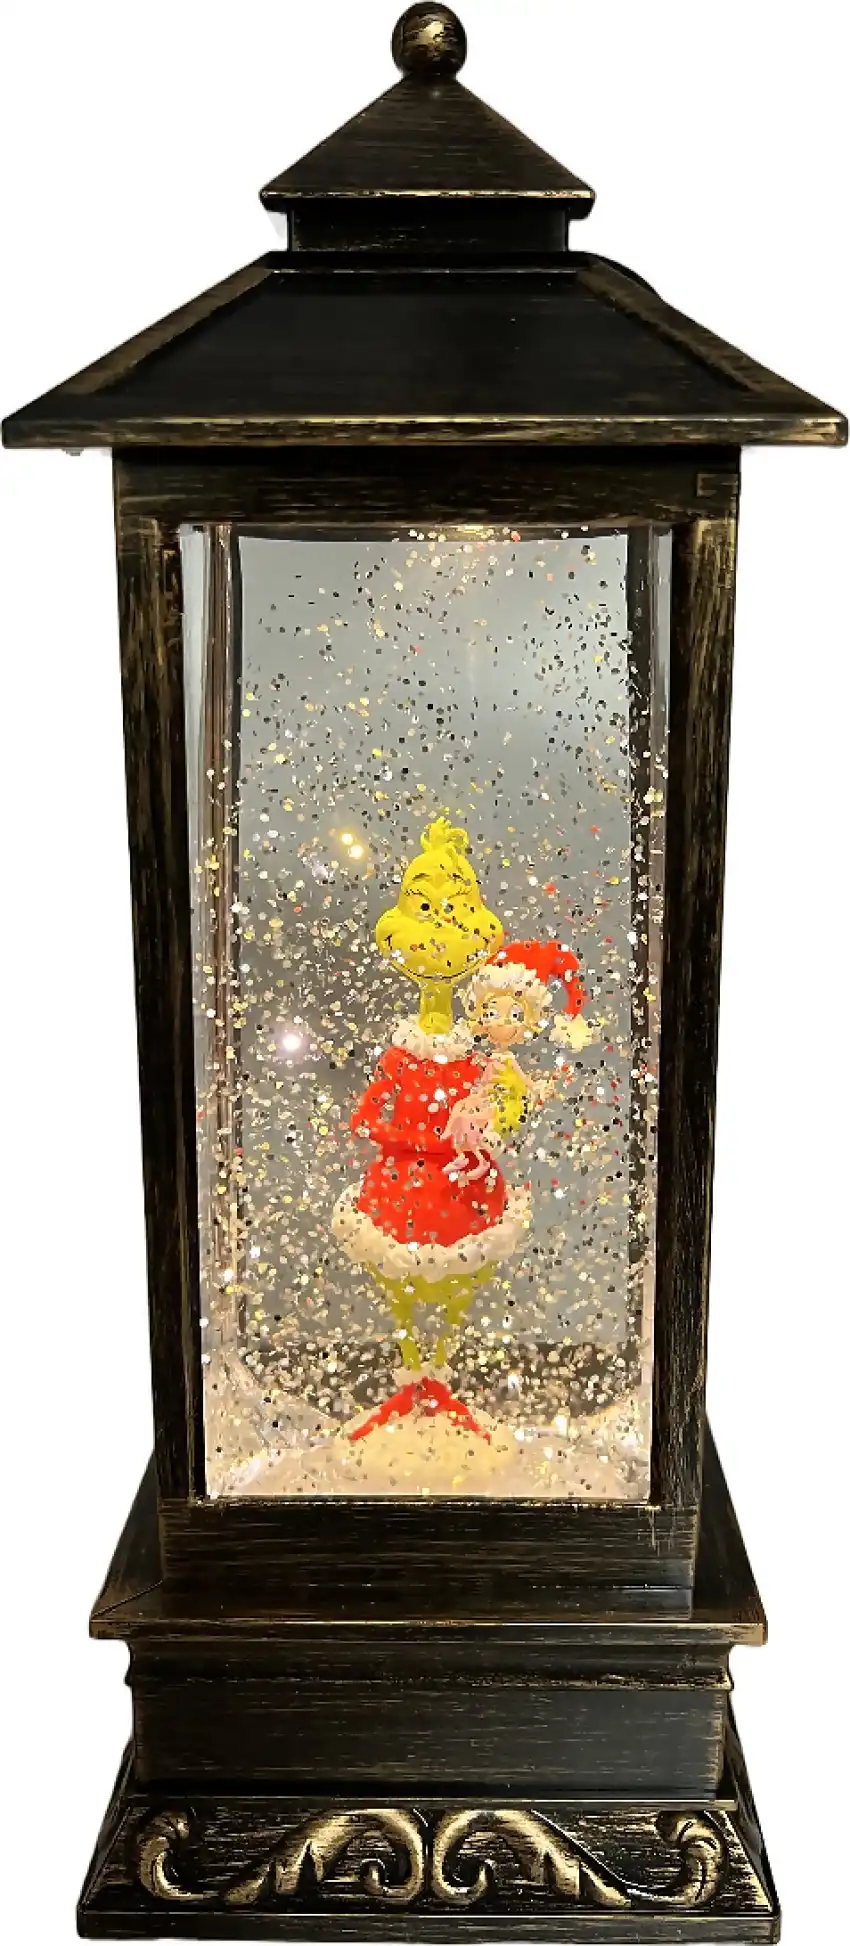 Cotton Candy - Xmas Grinch Lantern With Cindy Lou - Dr. Seuss